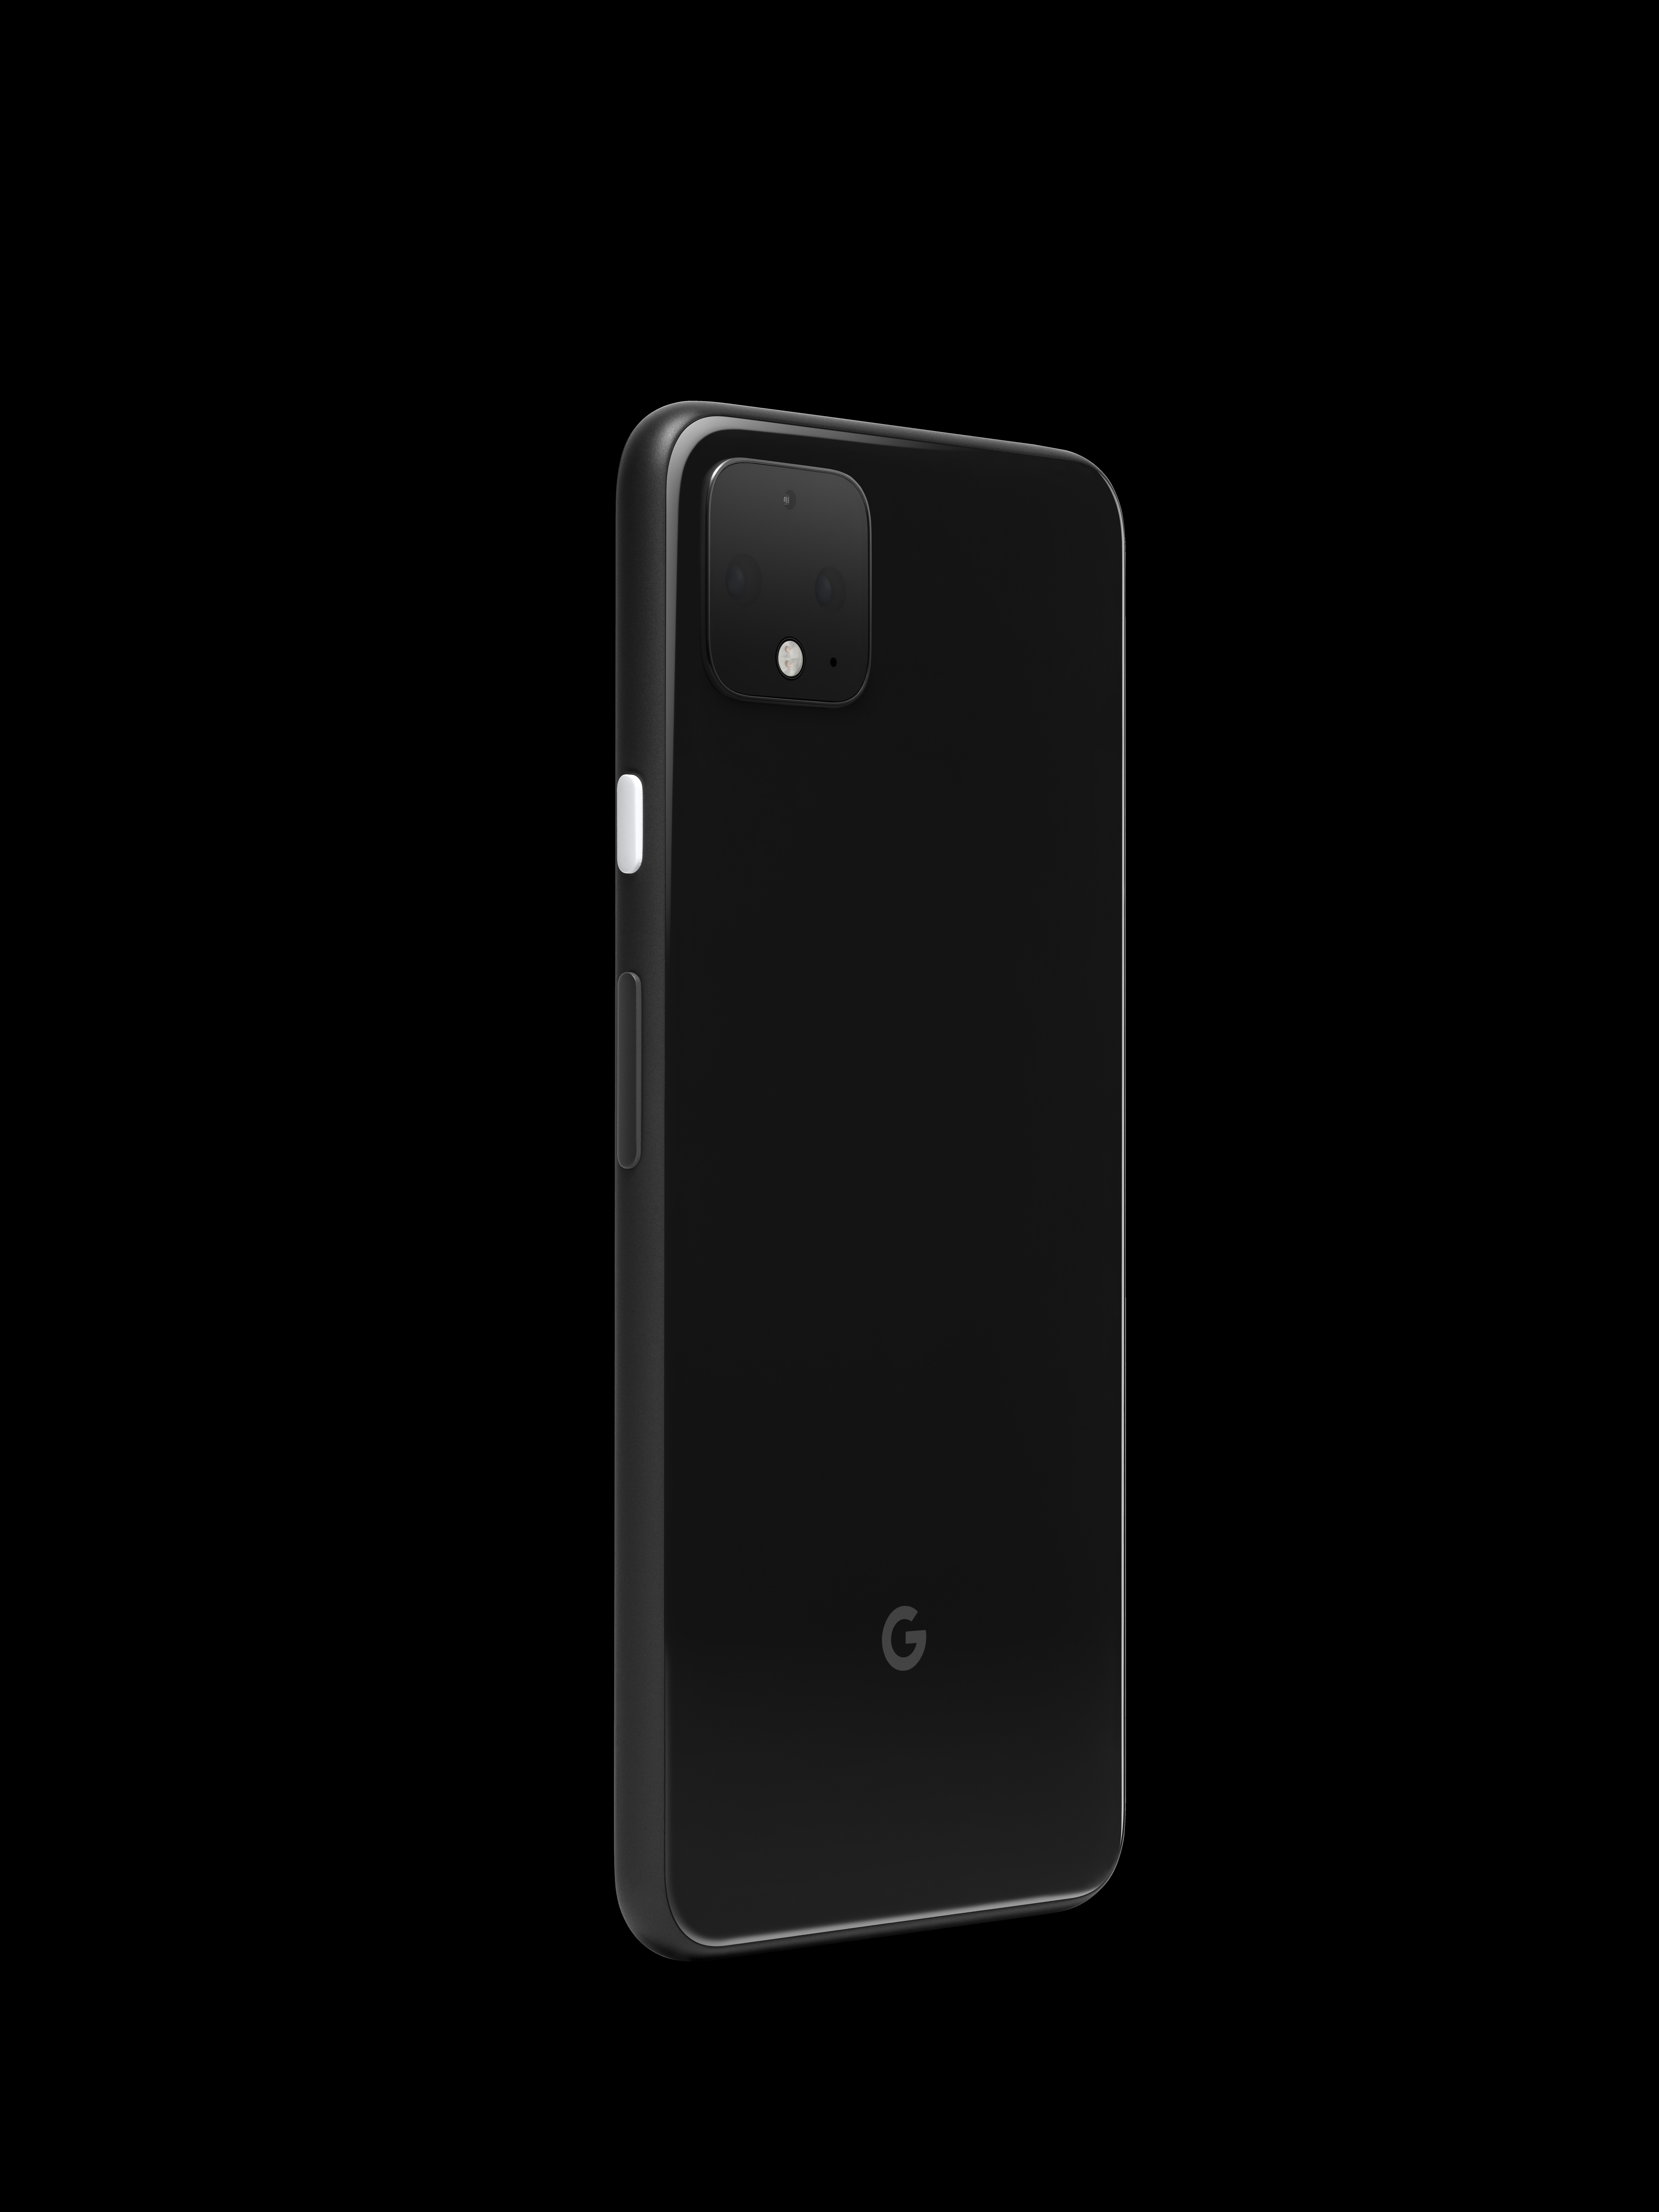 Google Pixel 4 XL Black 64 GB, Unlocked - image 4 of 4